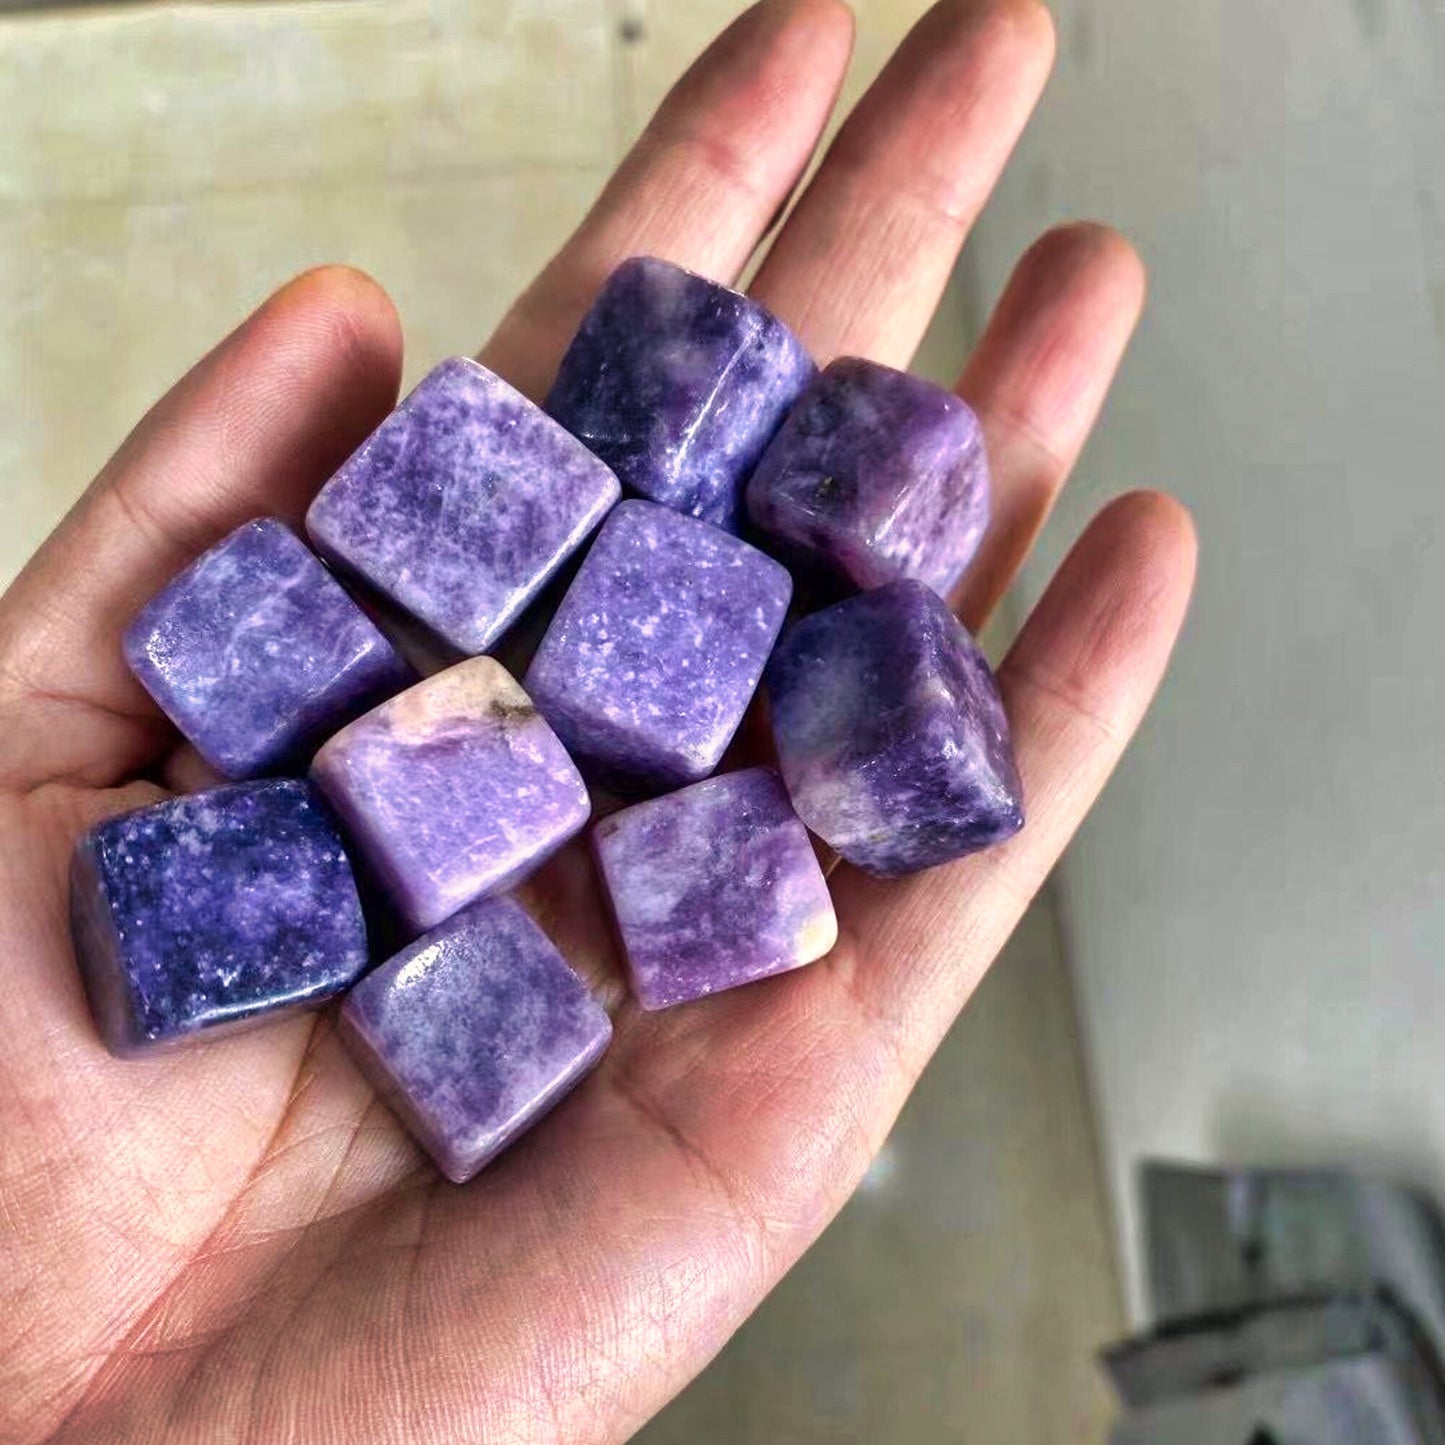 Beautiful Lilac Crystal Stone Crystal Tumble Stones Polished Ice Cube Stone Healing Chakra Reiki Stone As Gift 1000g